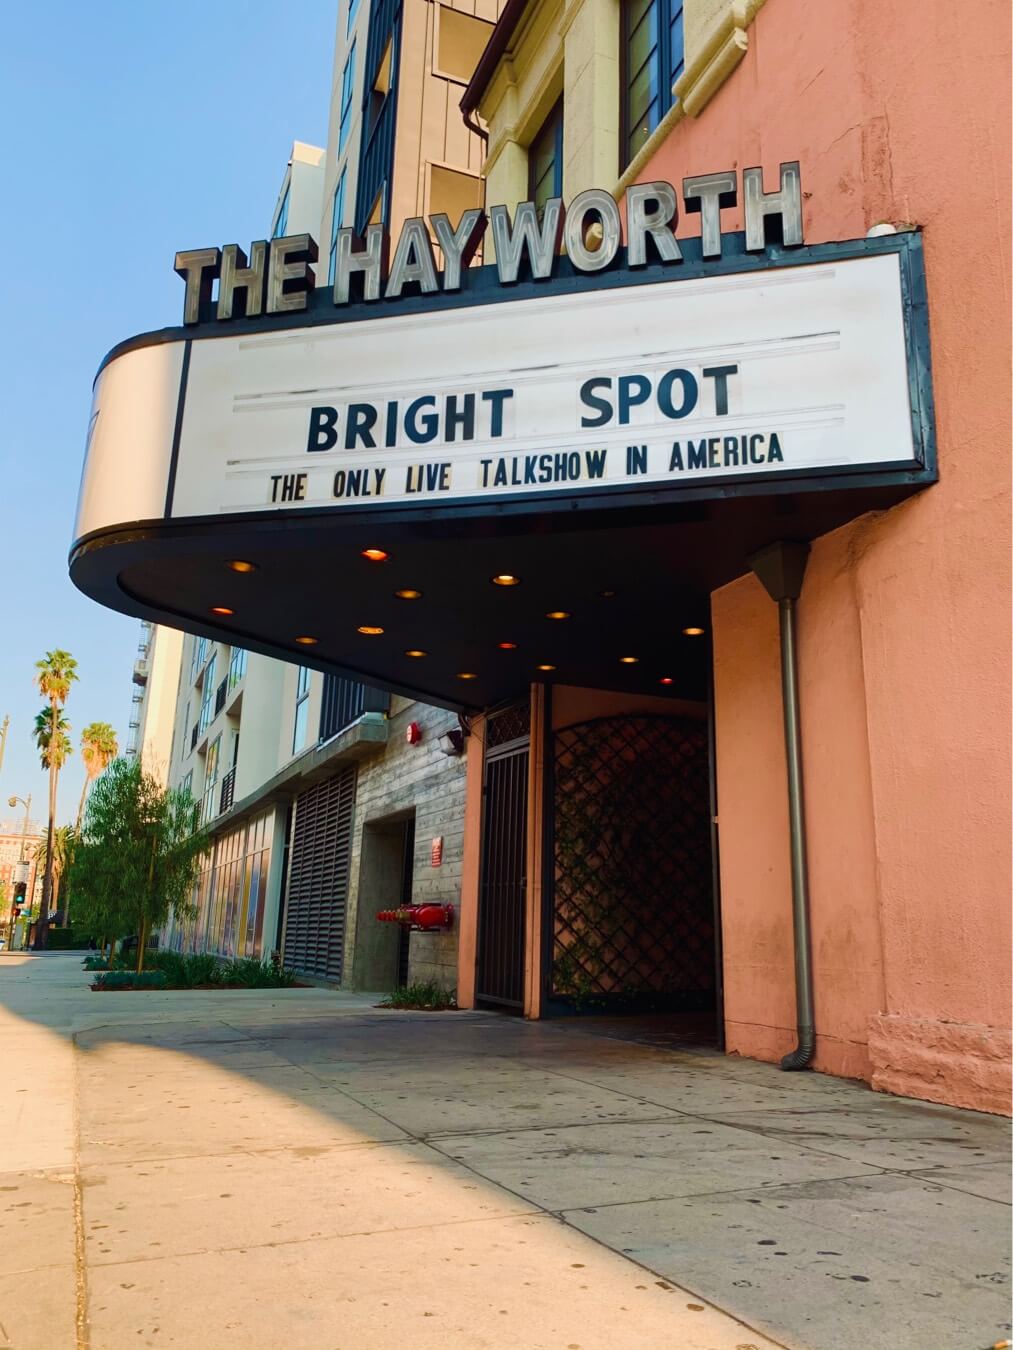 Bright Spot (10.17.2020))